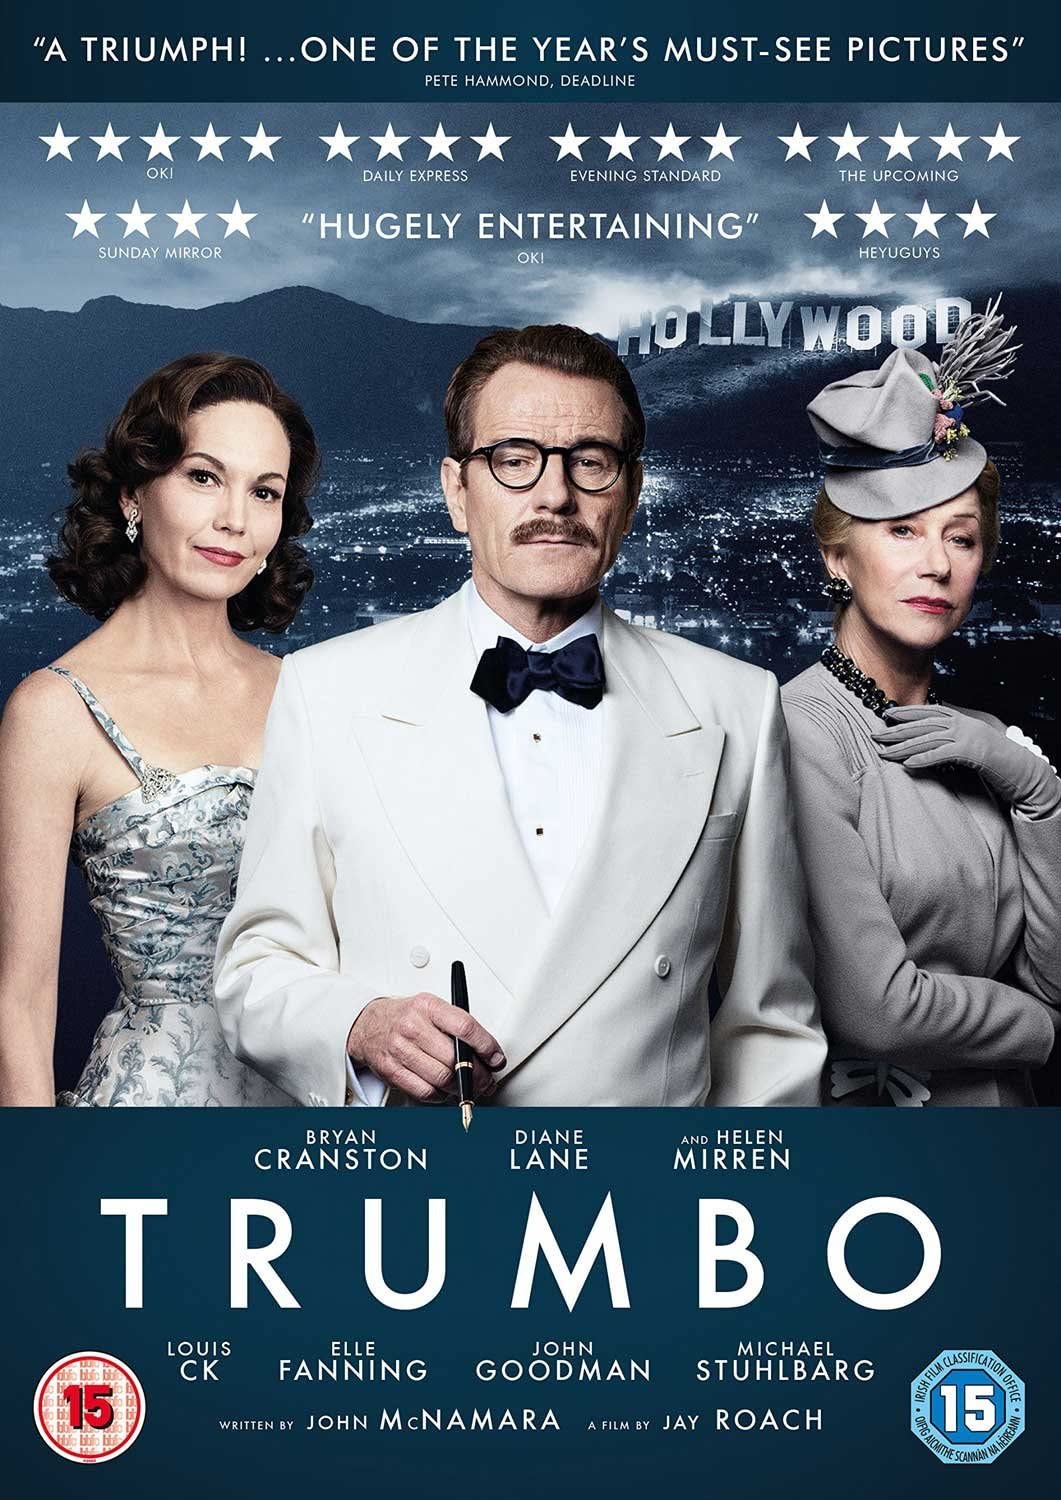 Trumbo [2016] - Drama/Crime [DVD]